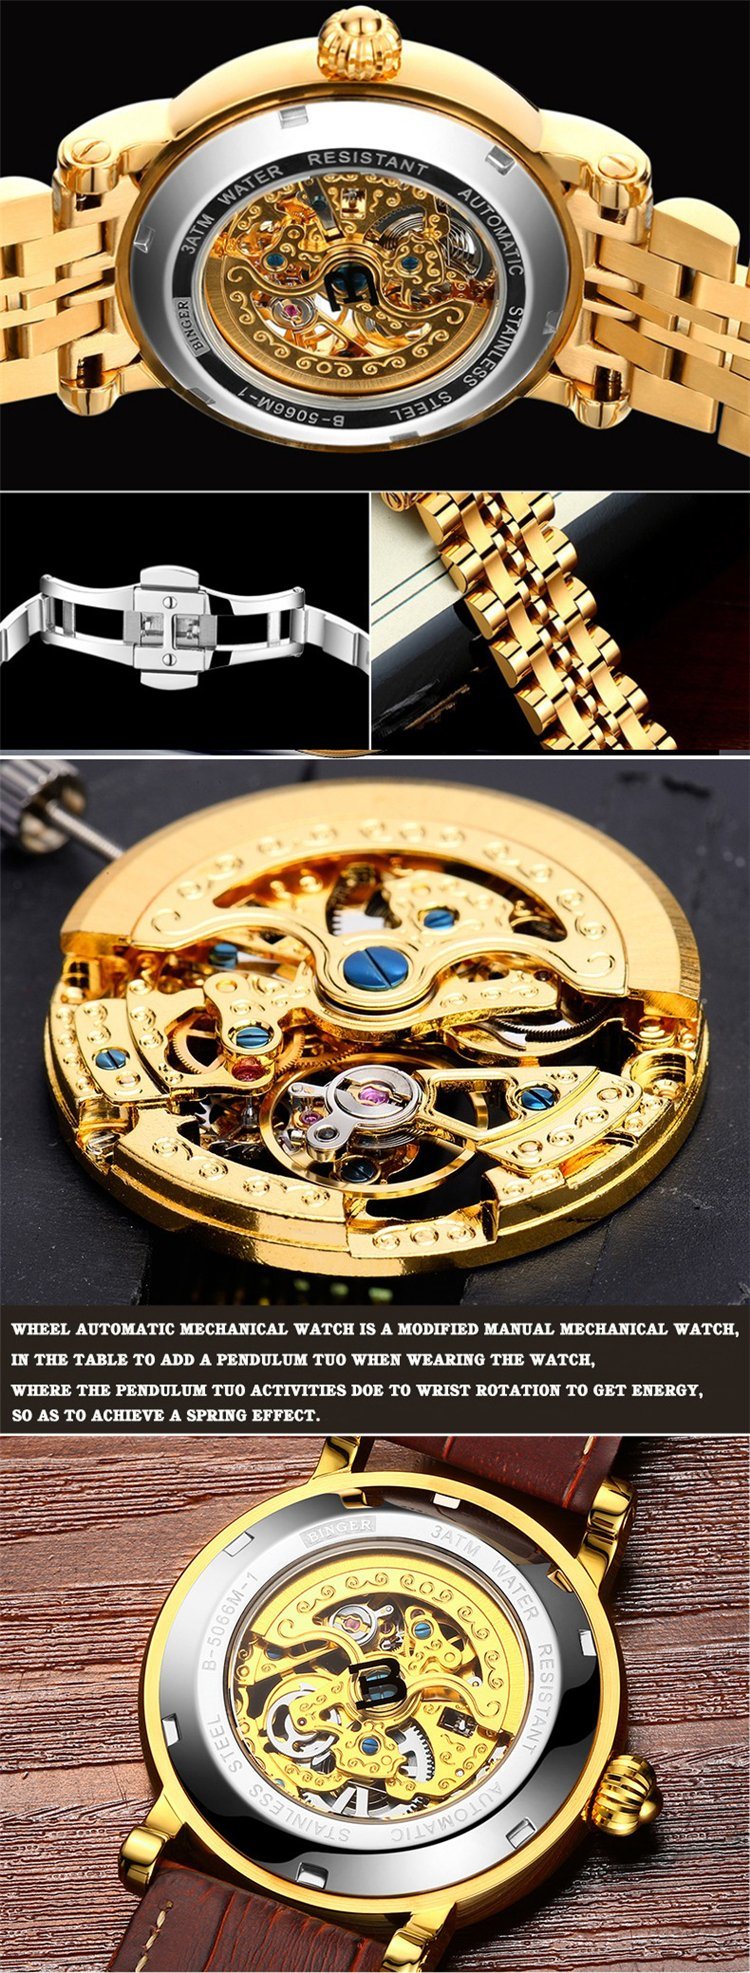 Binger 5066 Fashion Golden Stainless Steel Couple Mechanical Watch